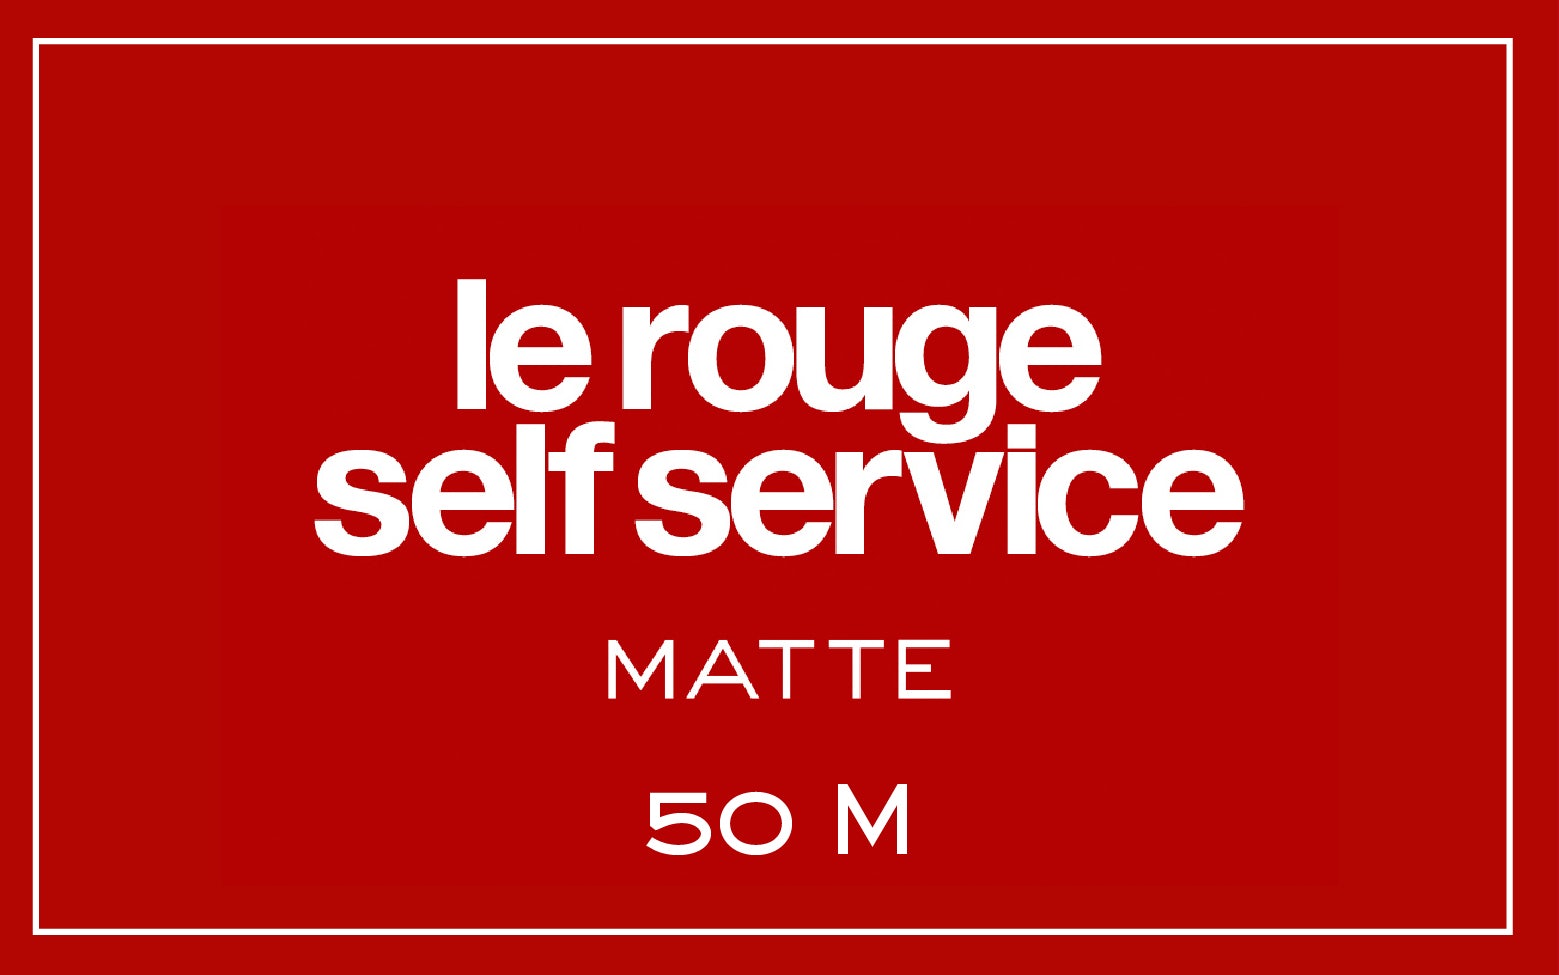 La bouche rouge Rouge Self Service Matte lipstick swatch with text